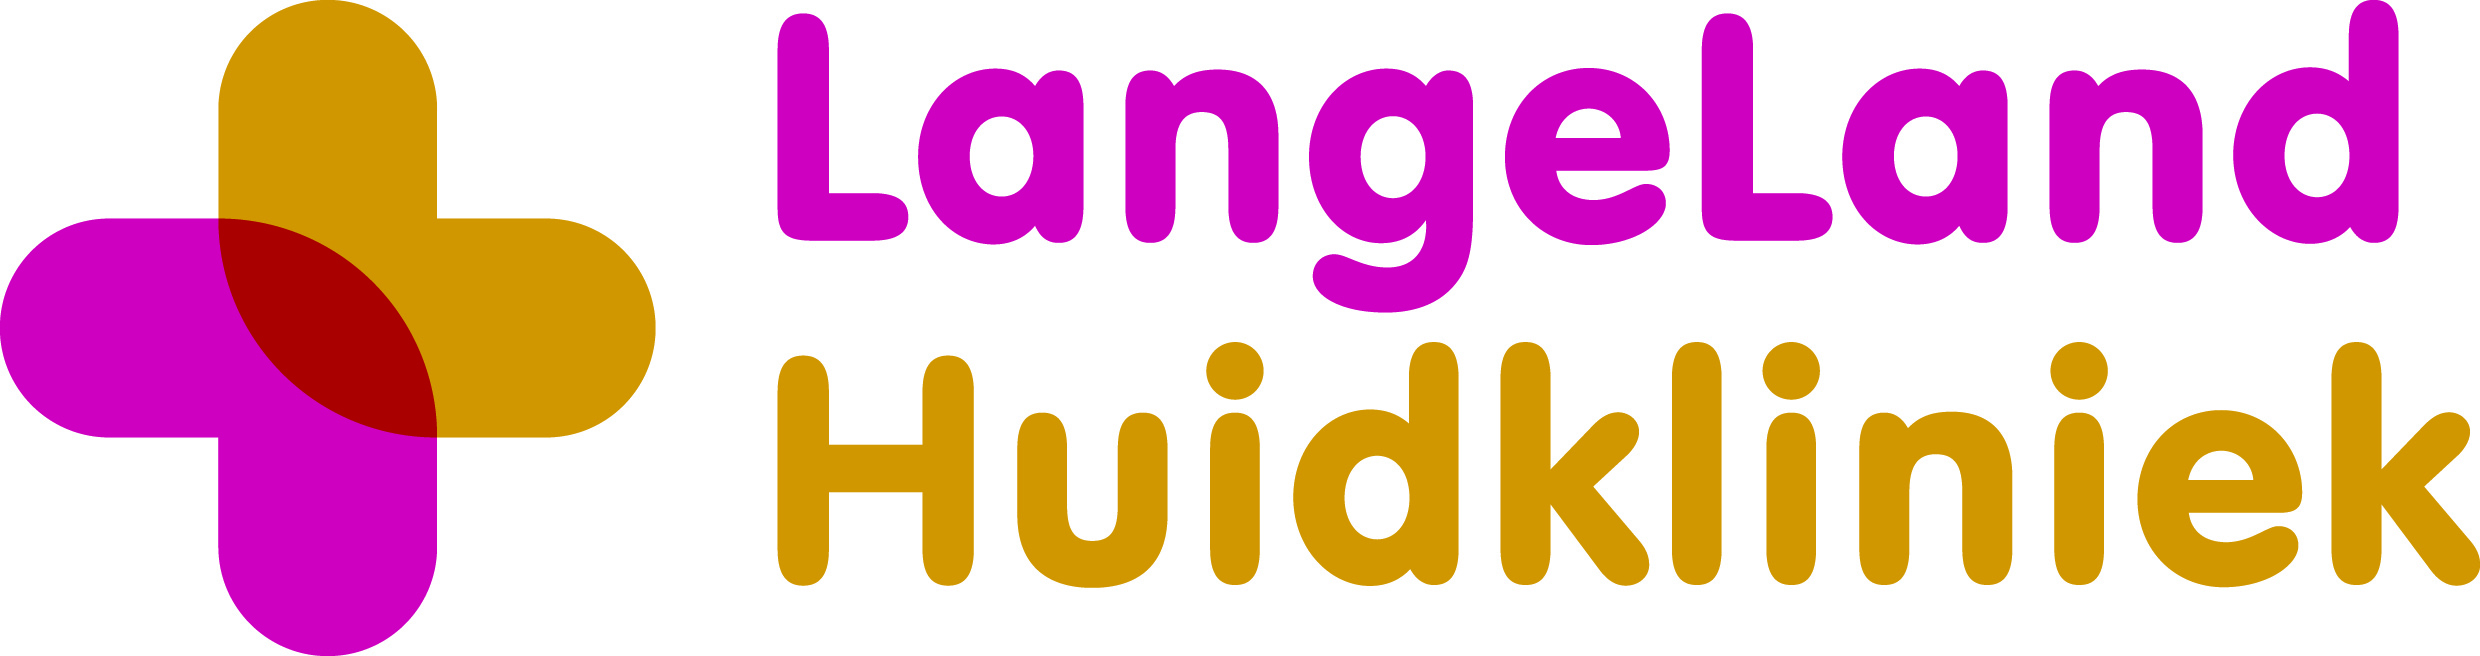 Logo Langeland Huidkliniek